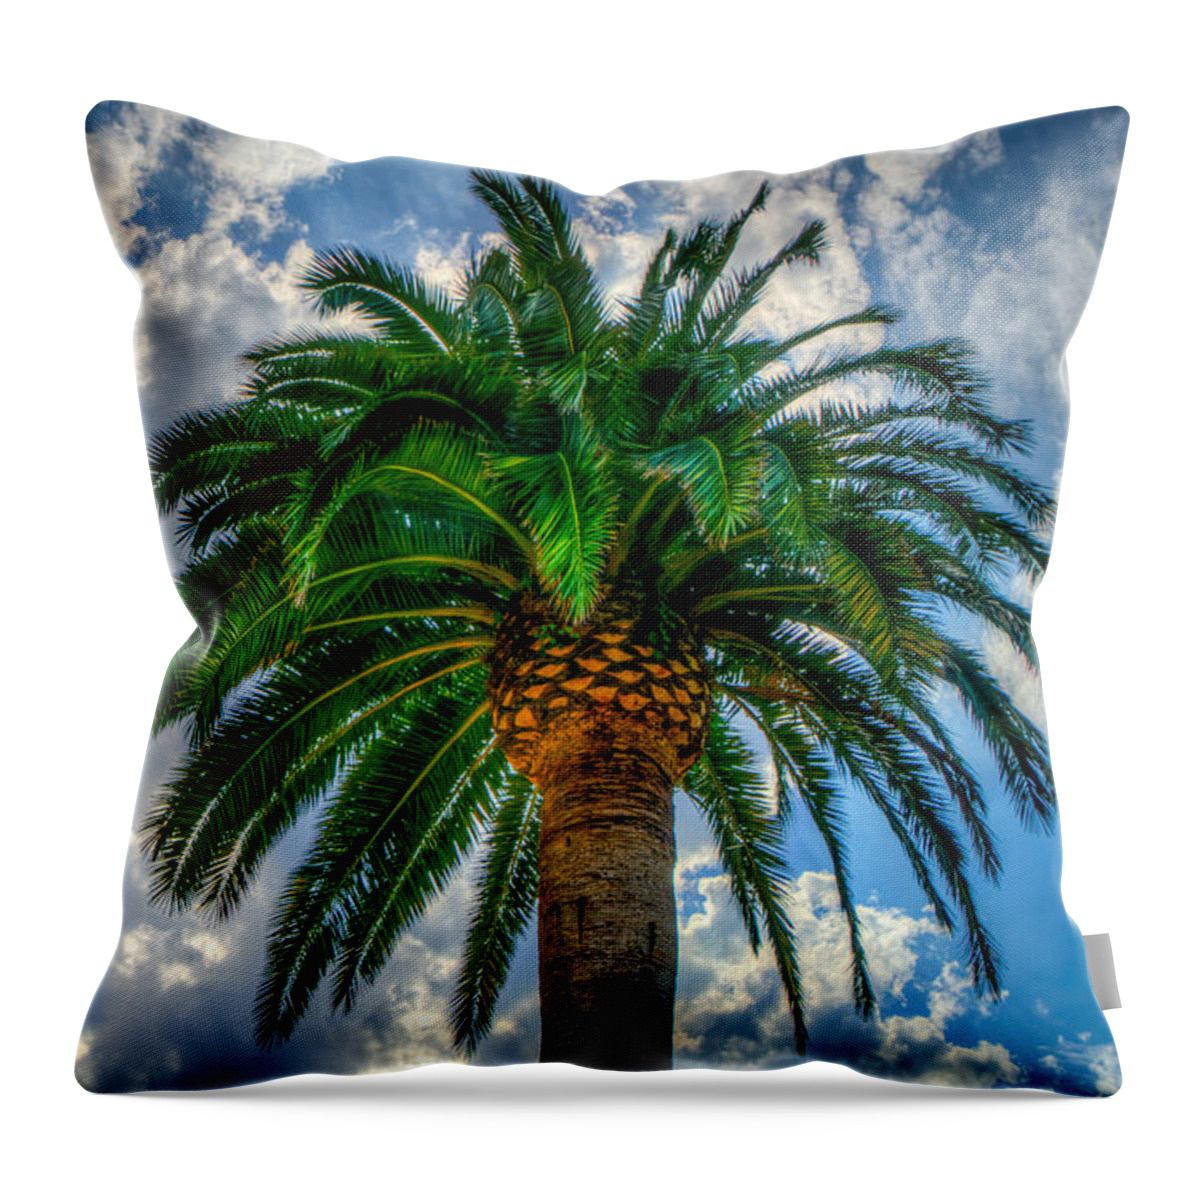 Palm Tree Throw Pillow featuring the photograph Palm by Derek Dean